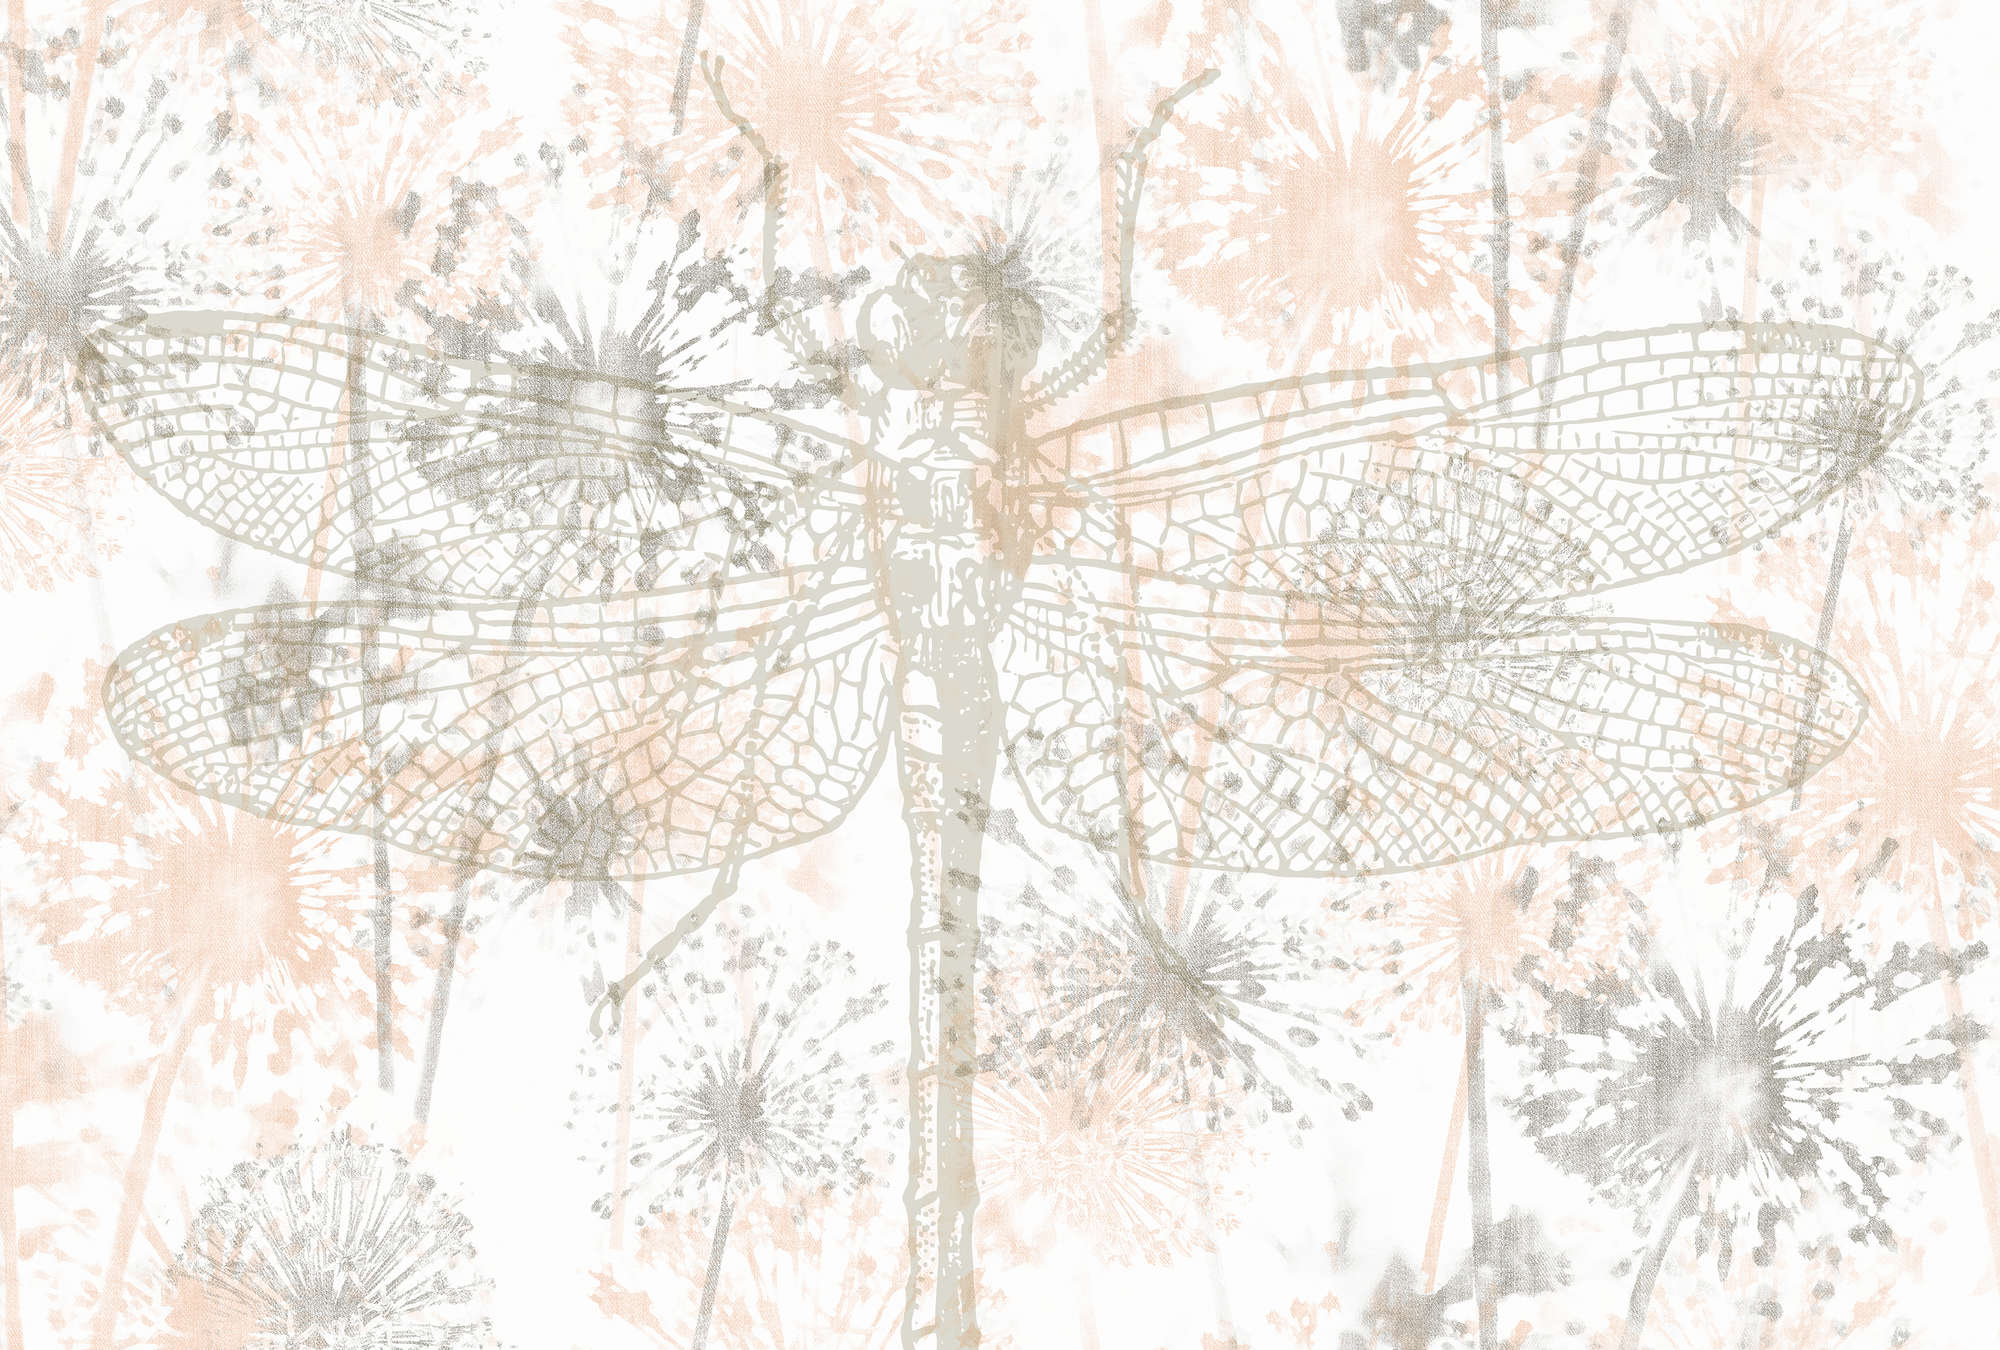             Photo wallpaper dragonflies & flowers in graphic design - beige, grey, white
        